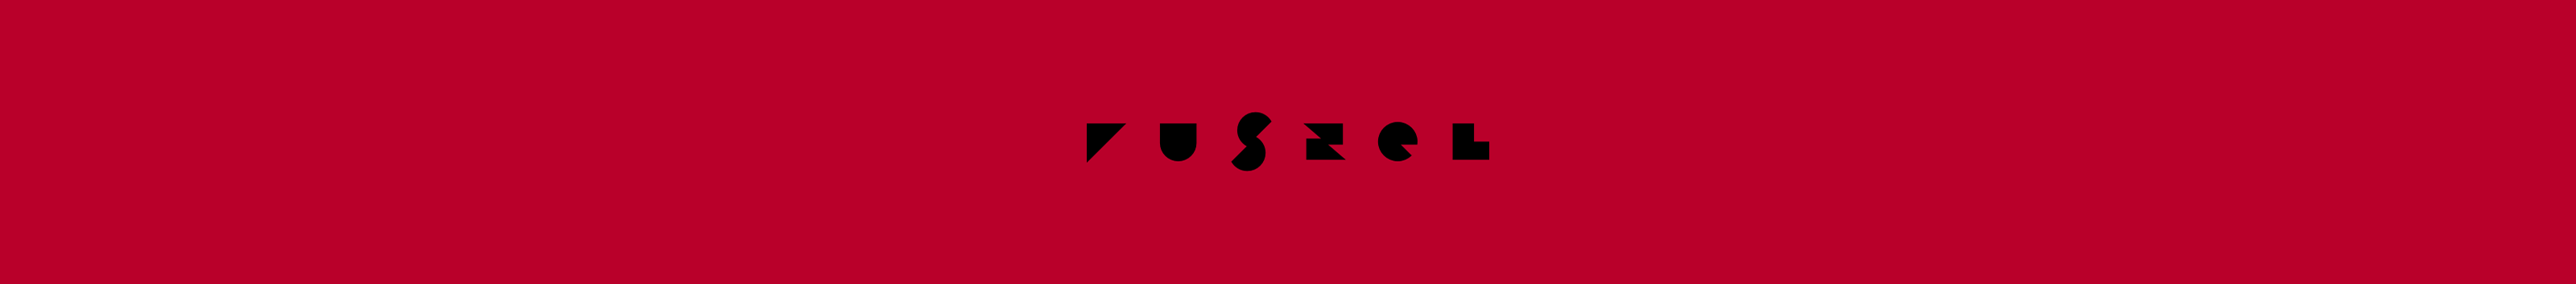 Lukasz Ruszel's profile banner